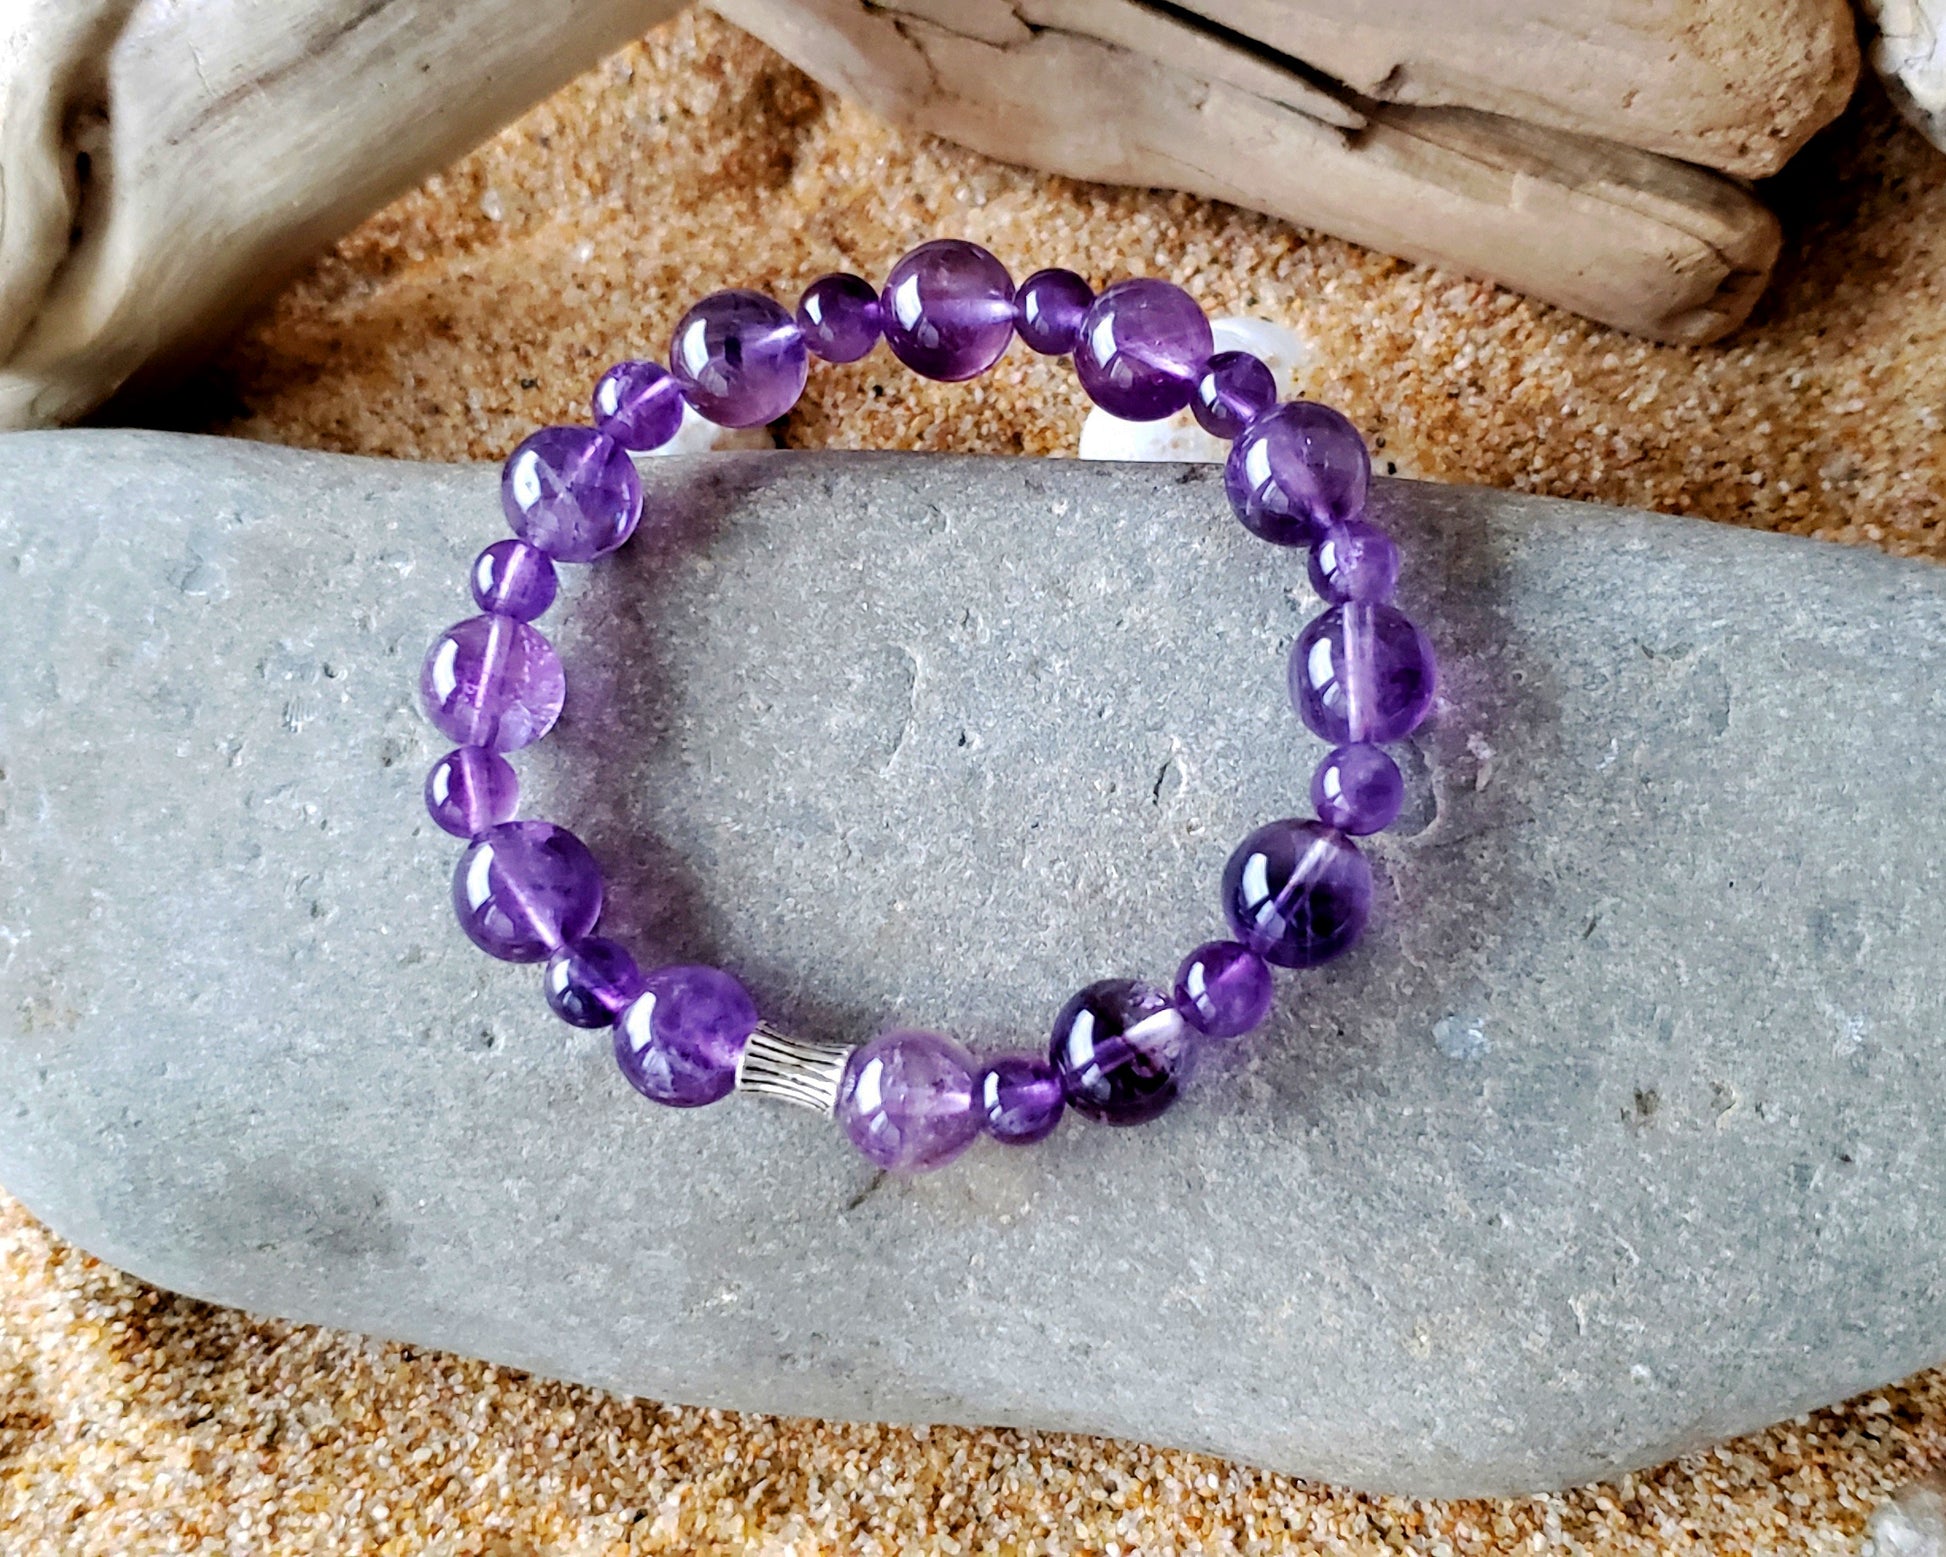 Beaded Amethyst Bracelet, pale purple translucent Amethyst stones with silver tube bead.